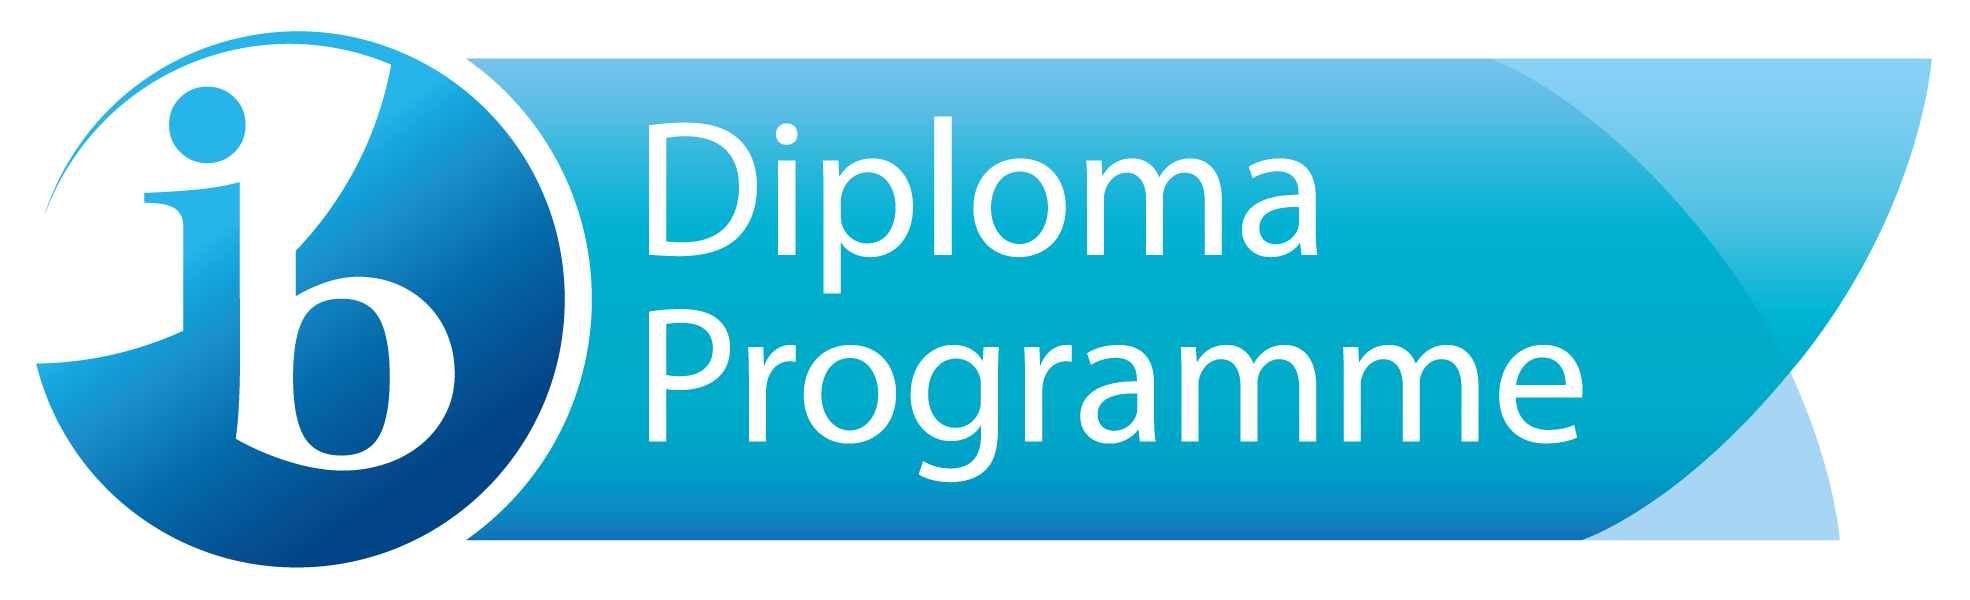 Diploma Programme logo